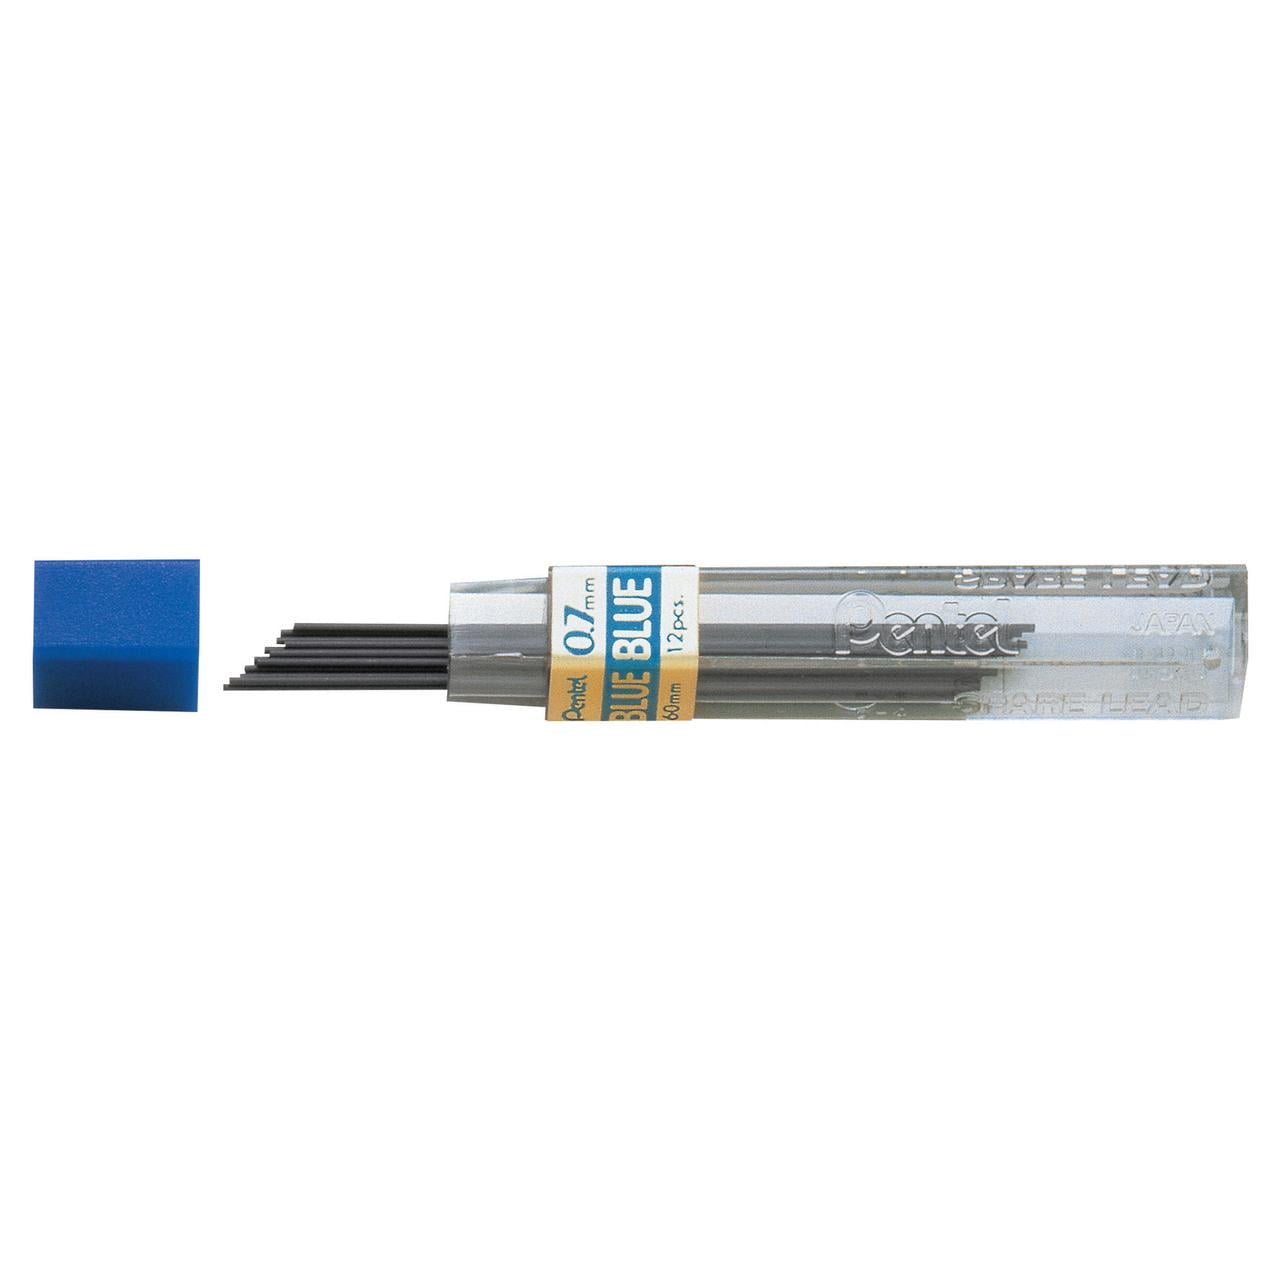 rOtring Tikky Mechanical Pencil Lead 0.5mm, 2H, 12 Lead (R505 511 2H) 